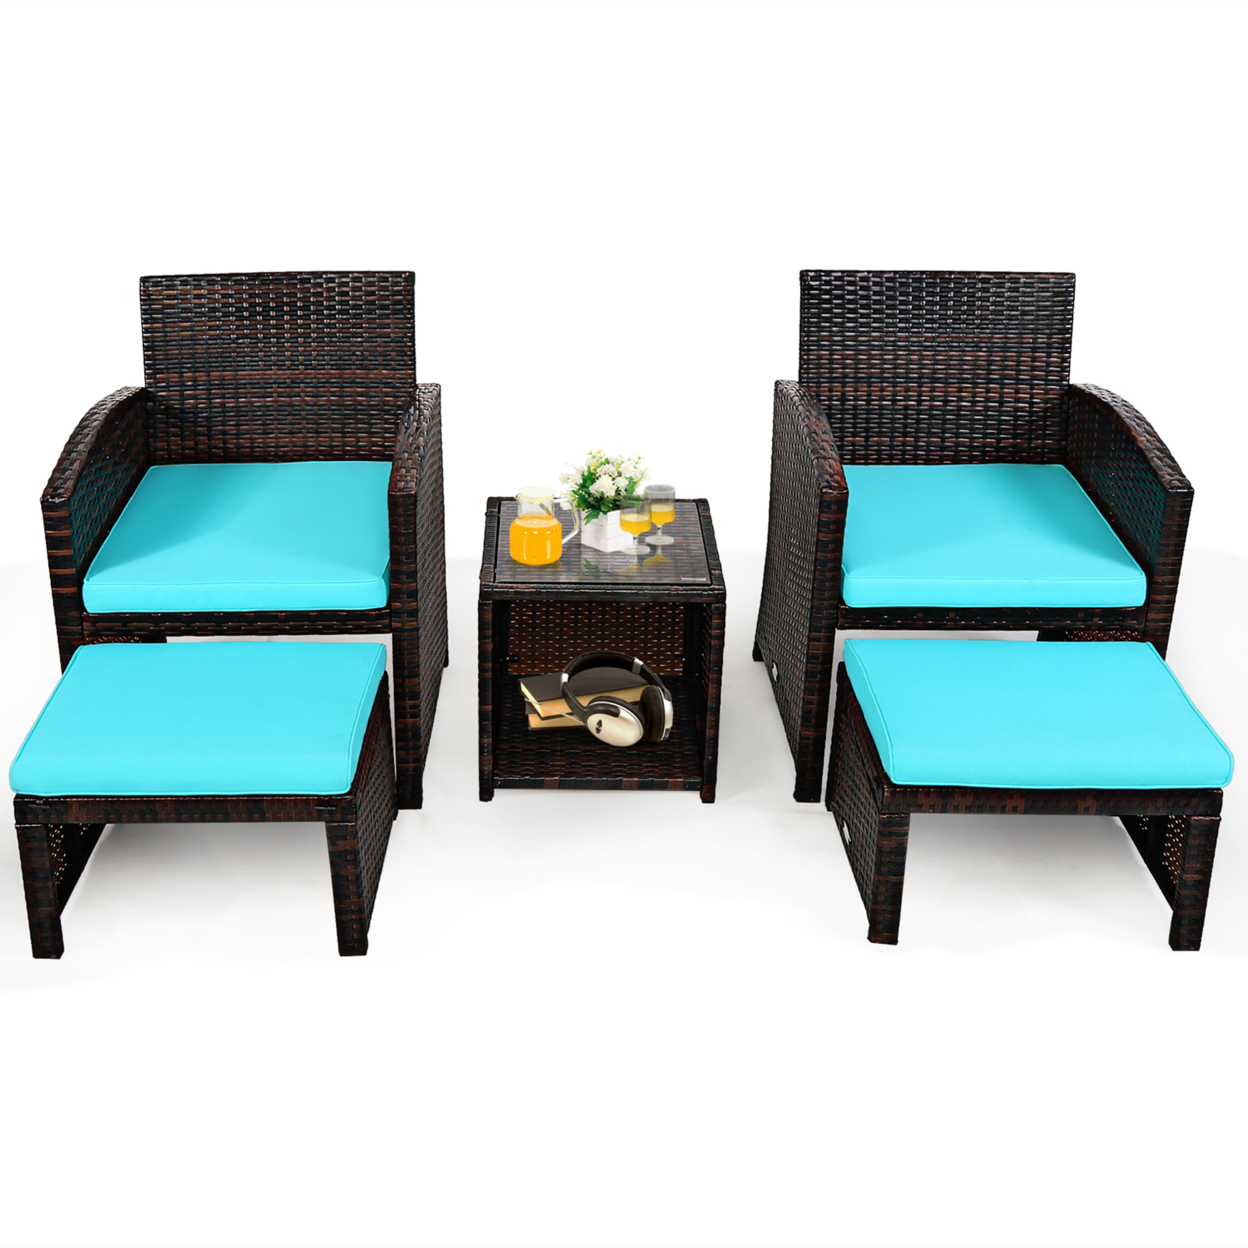 5PCS Rattan Patio Furniture Set Chair & Ottoman Set W/ Turquoise Cushions